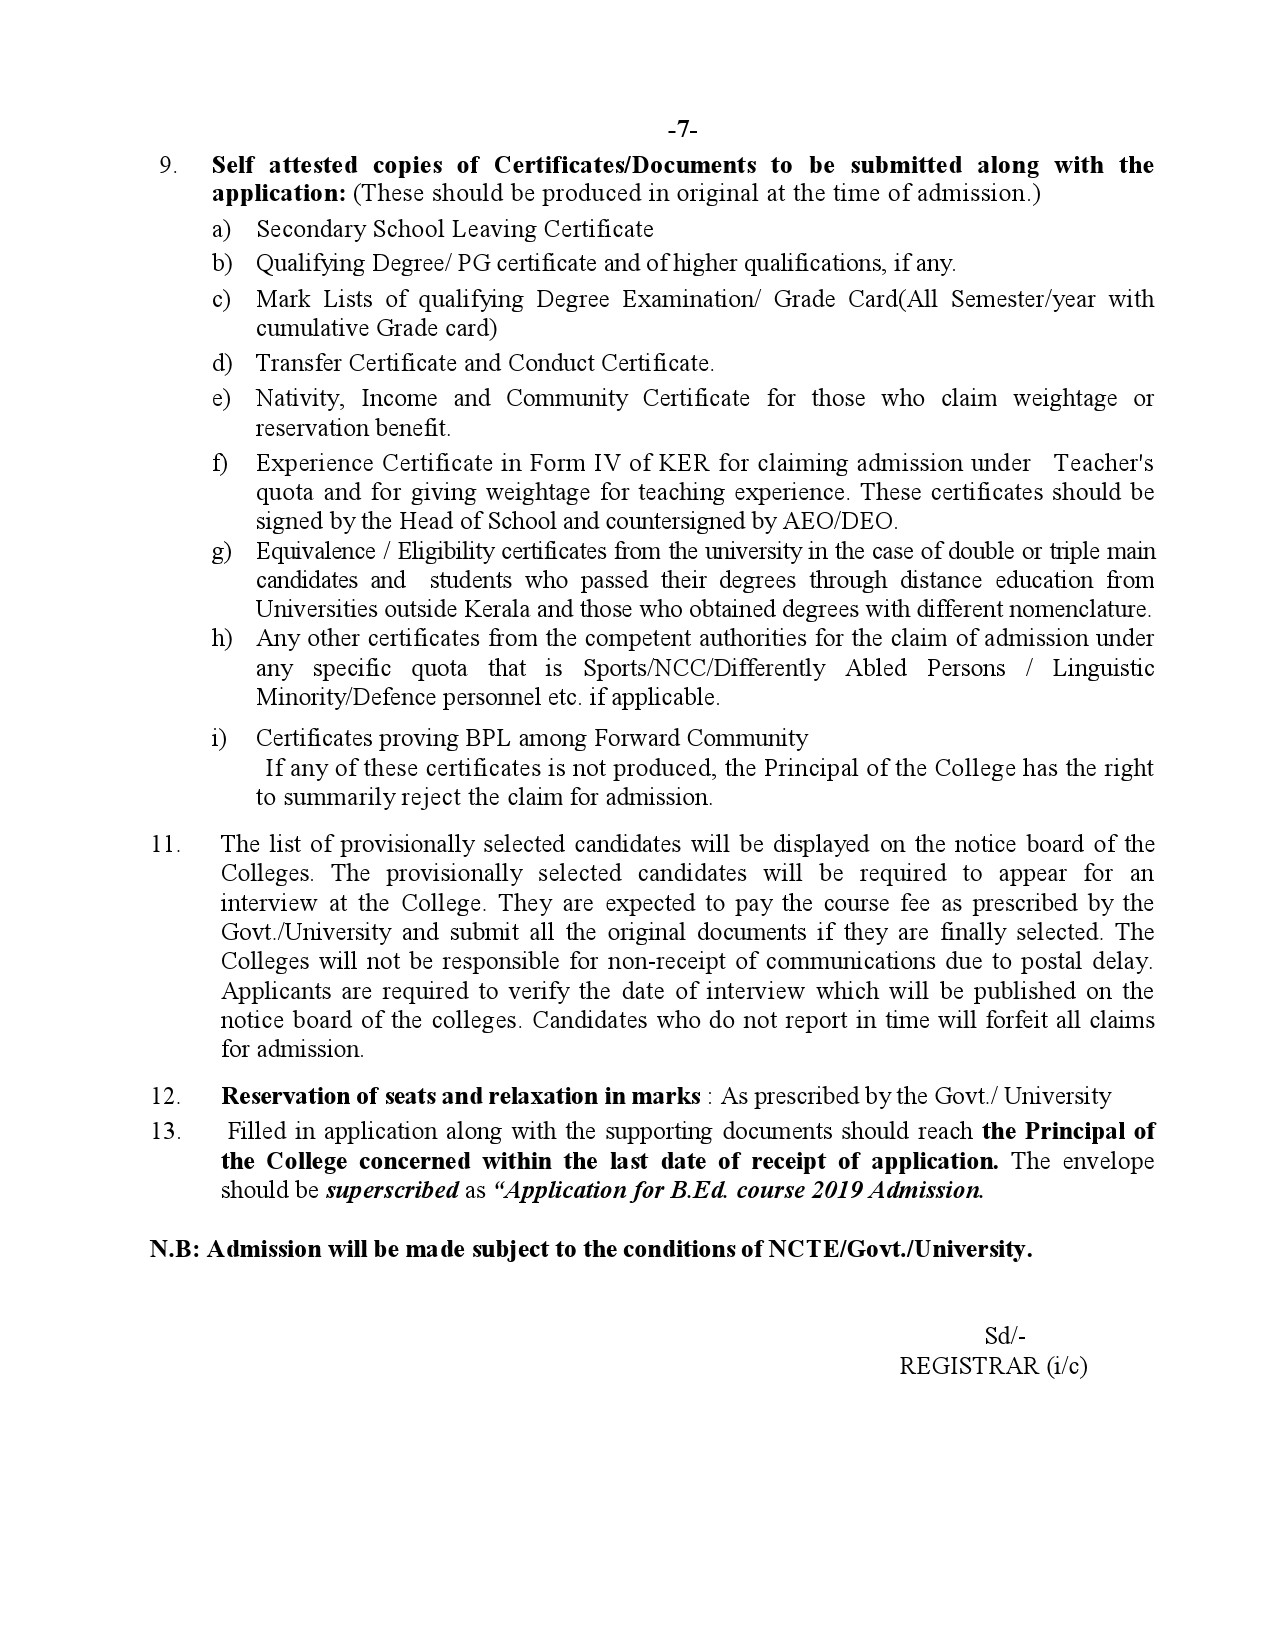 Kannur University B Ed Admission Prospectus 2019 - Notification Image 10